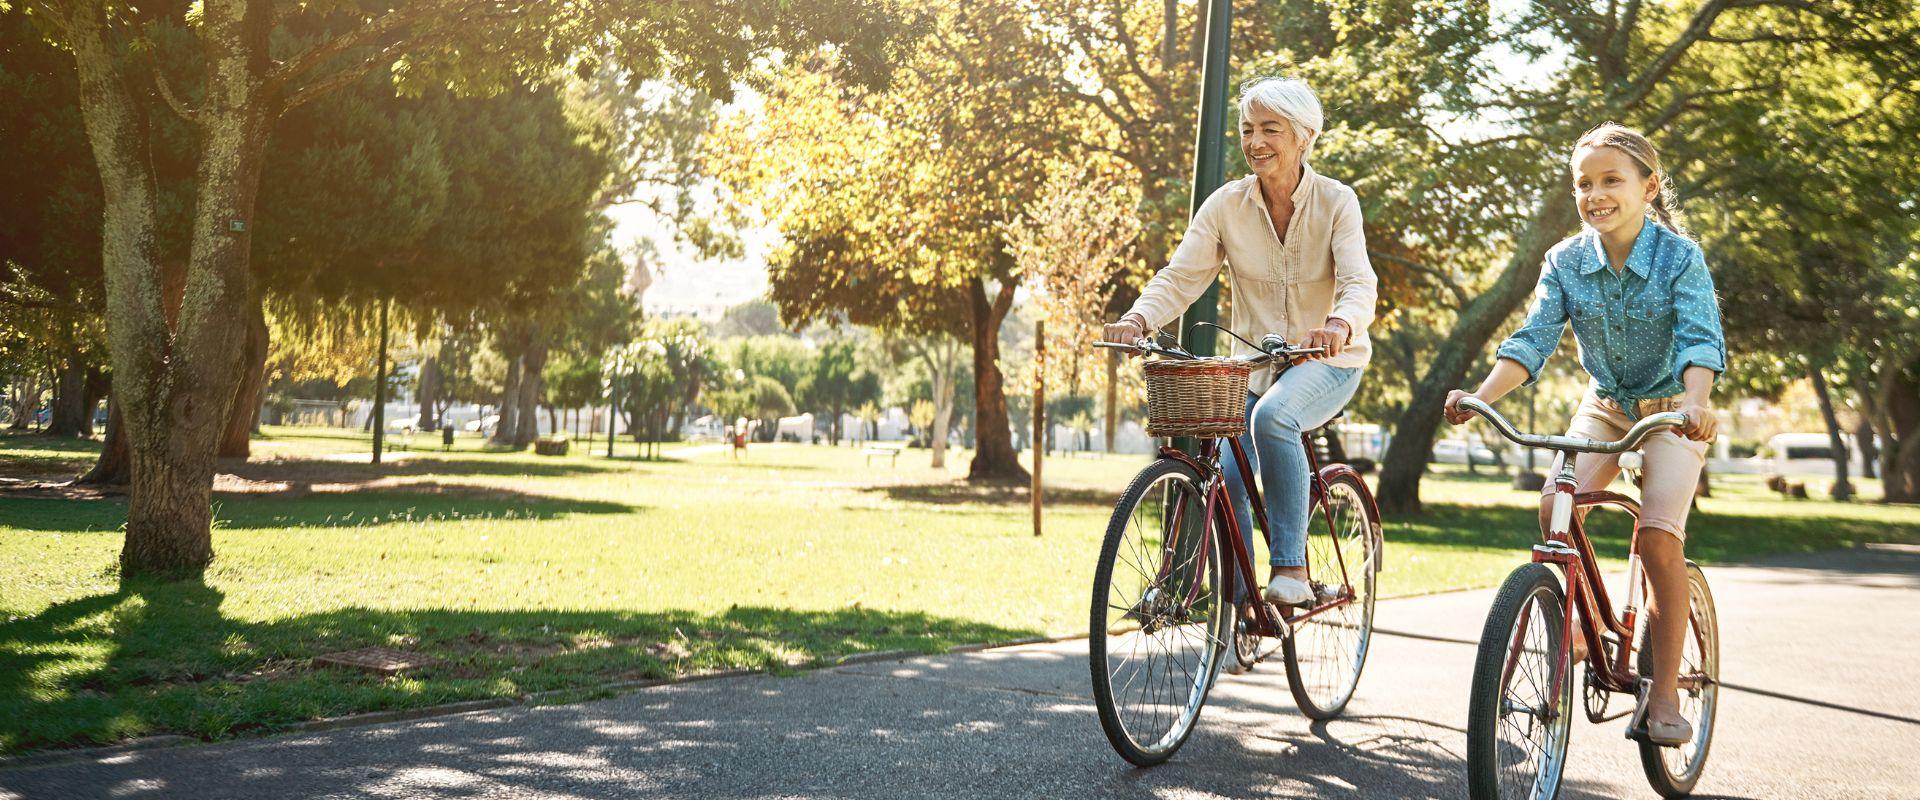 Grandma and granddaughter riding bikes in park